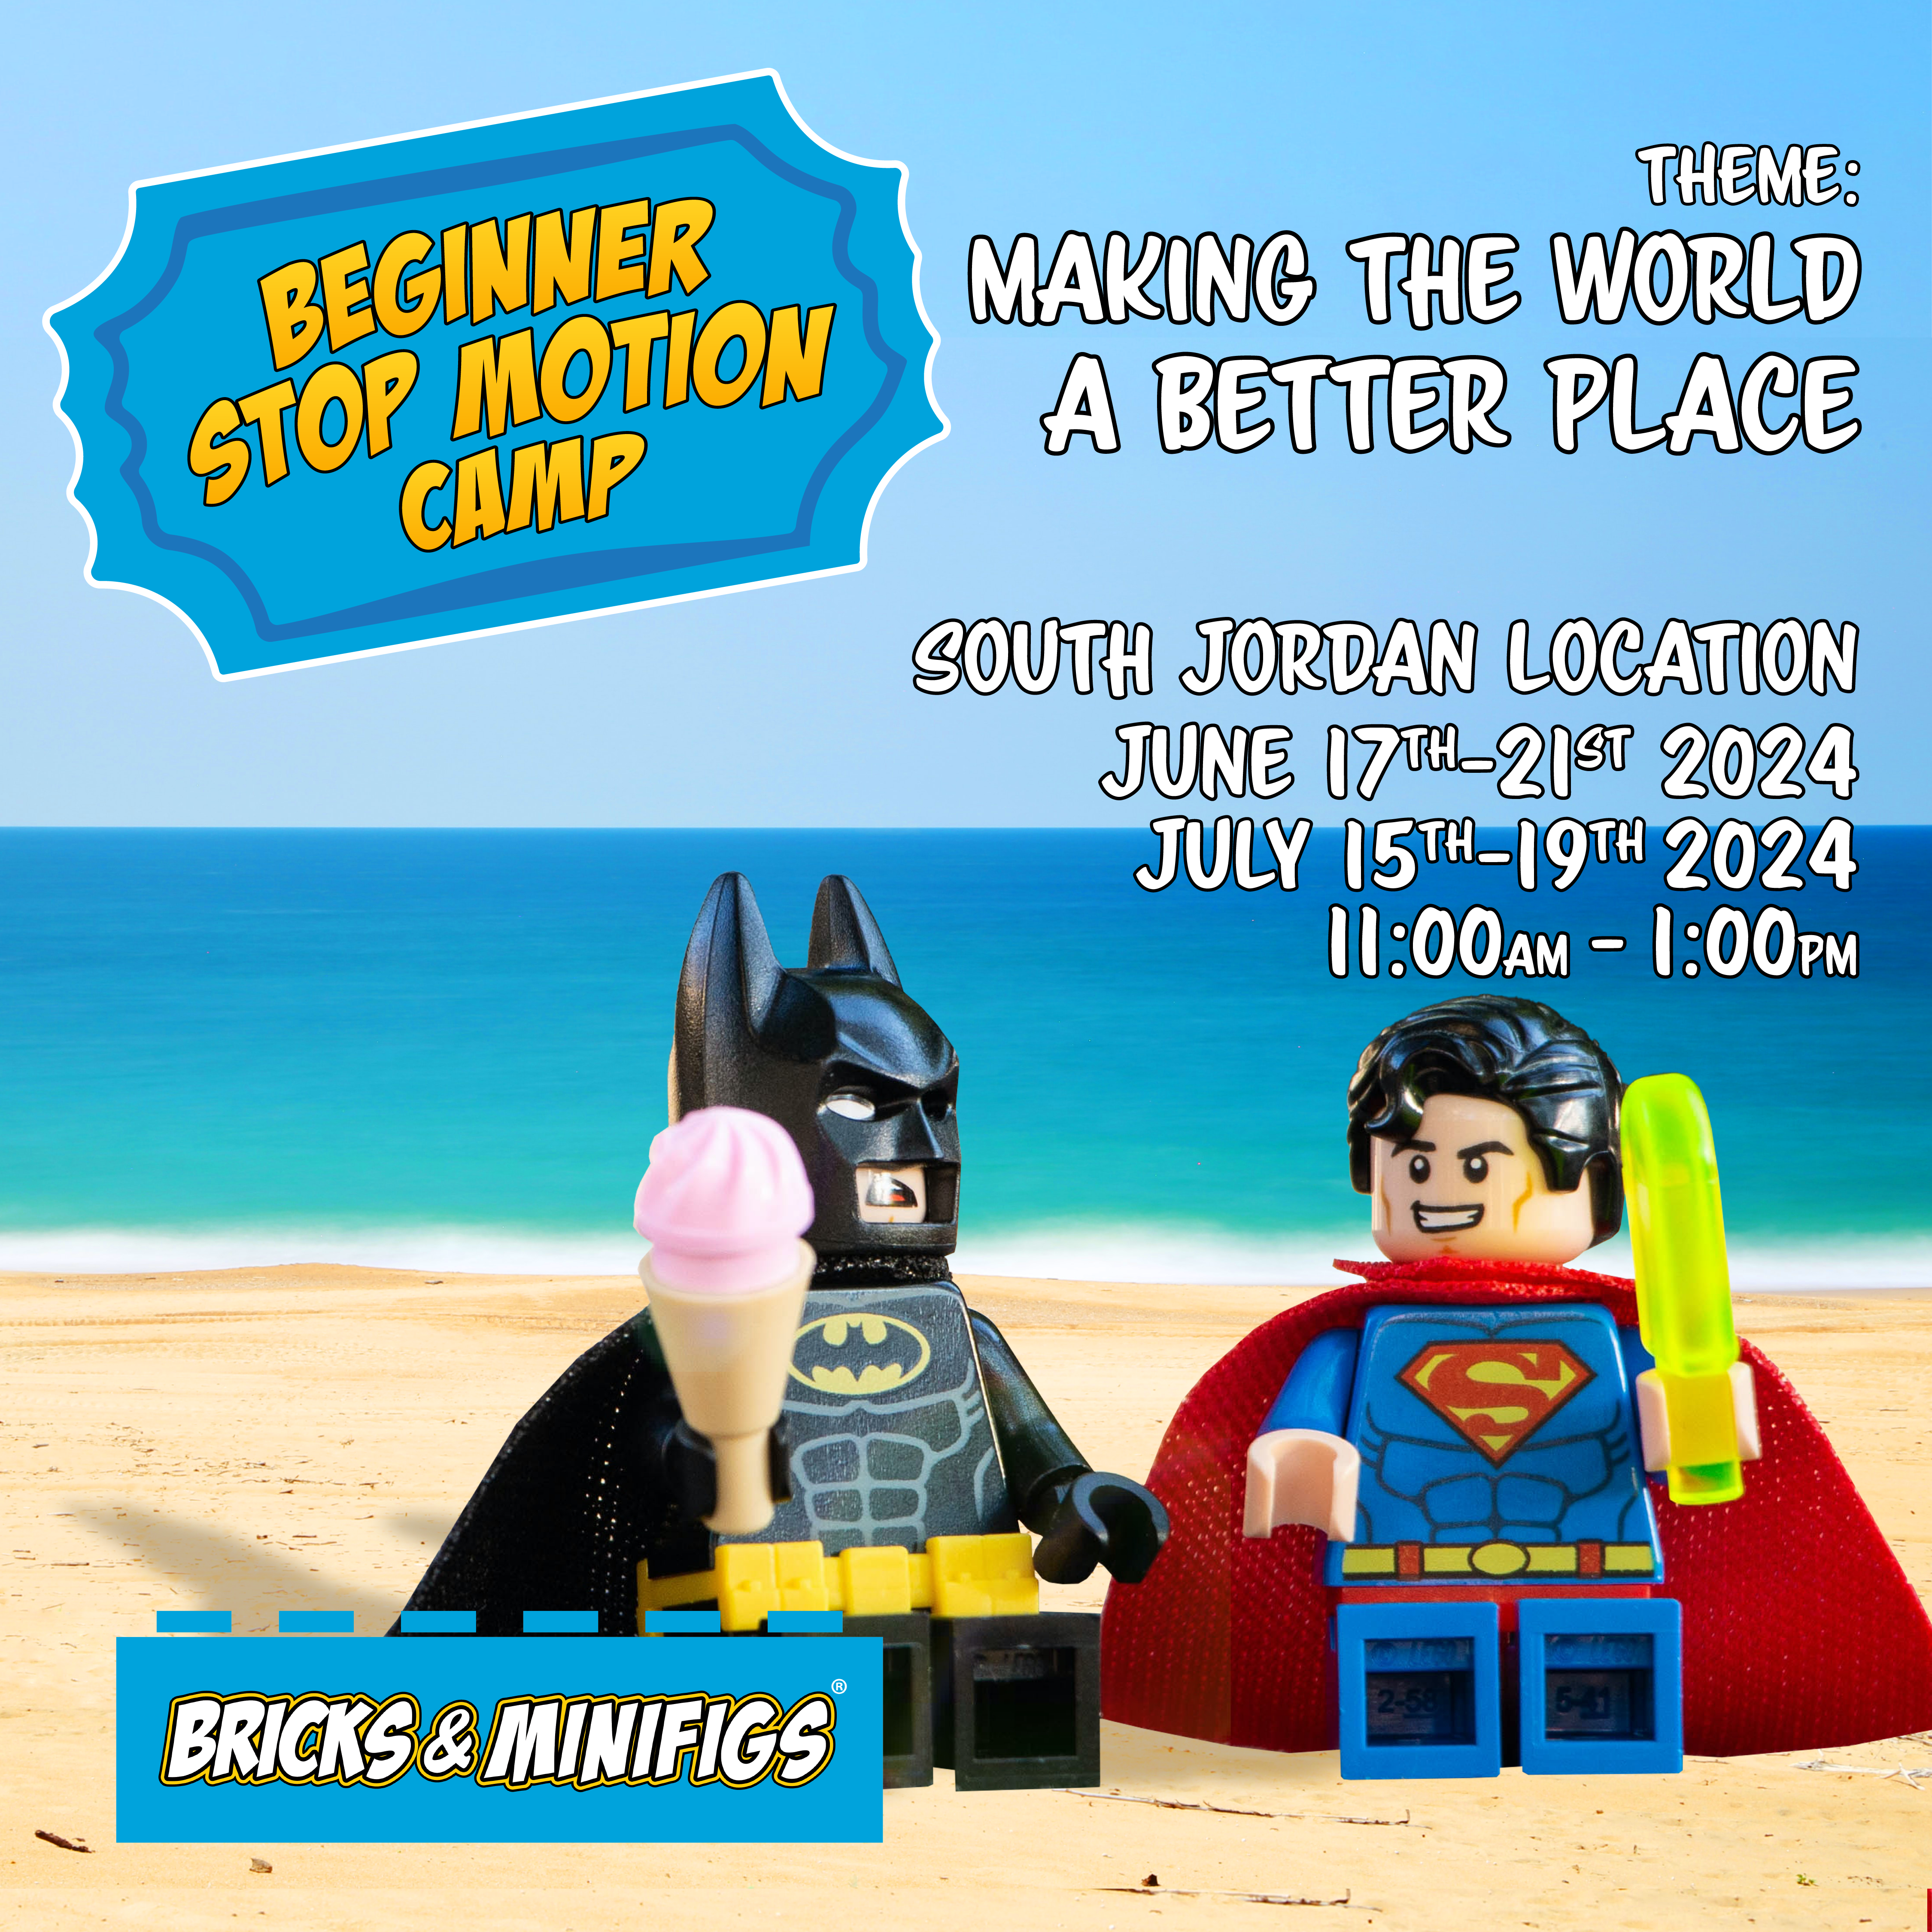 Beginner Stop Motion Camp: Summer 2024 - Making the World a Better Place (June 17-21 2024, 11:00 am - 1:00 pm, South Jordan)